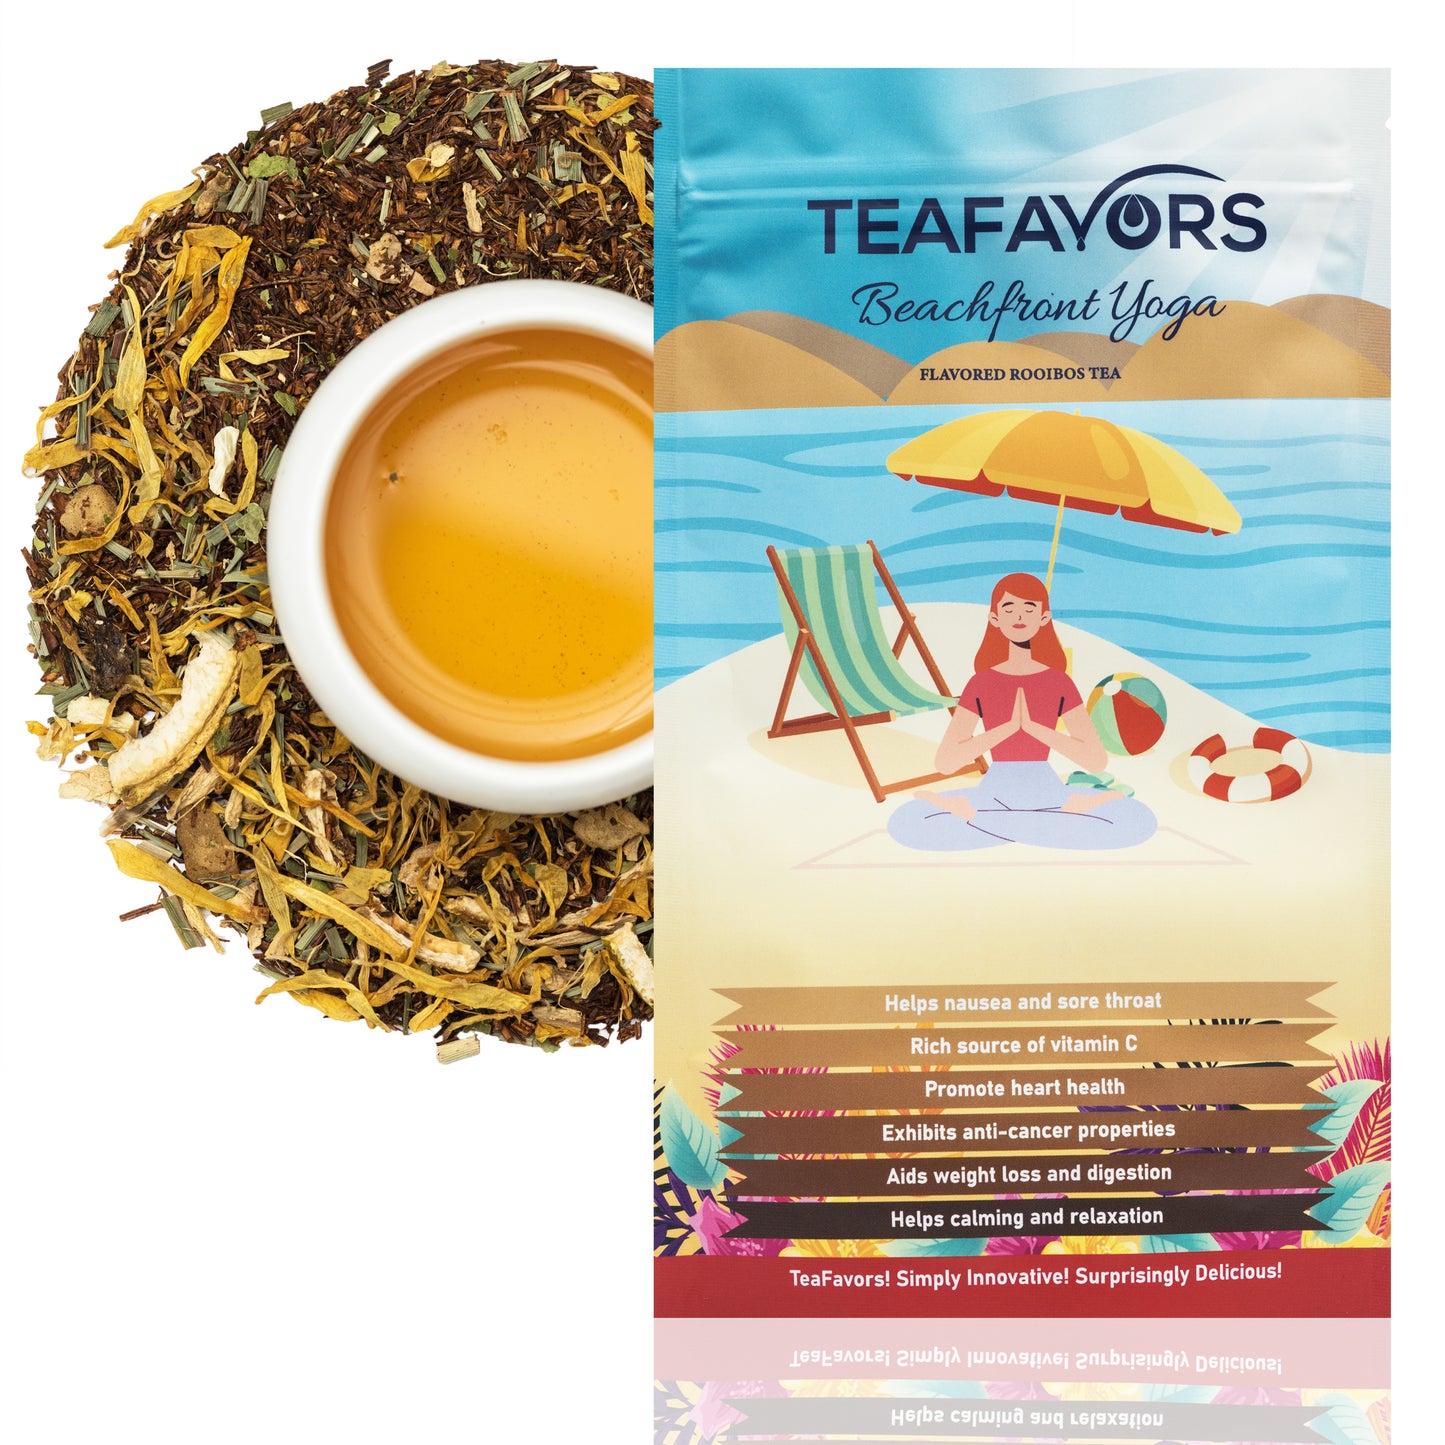 Beachfront Yoga - Rooibos Tea